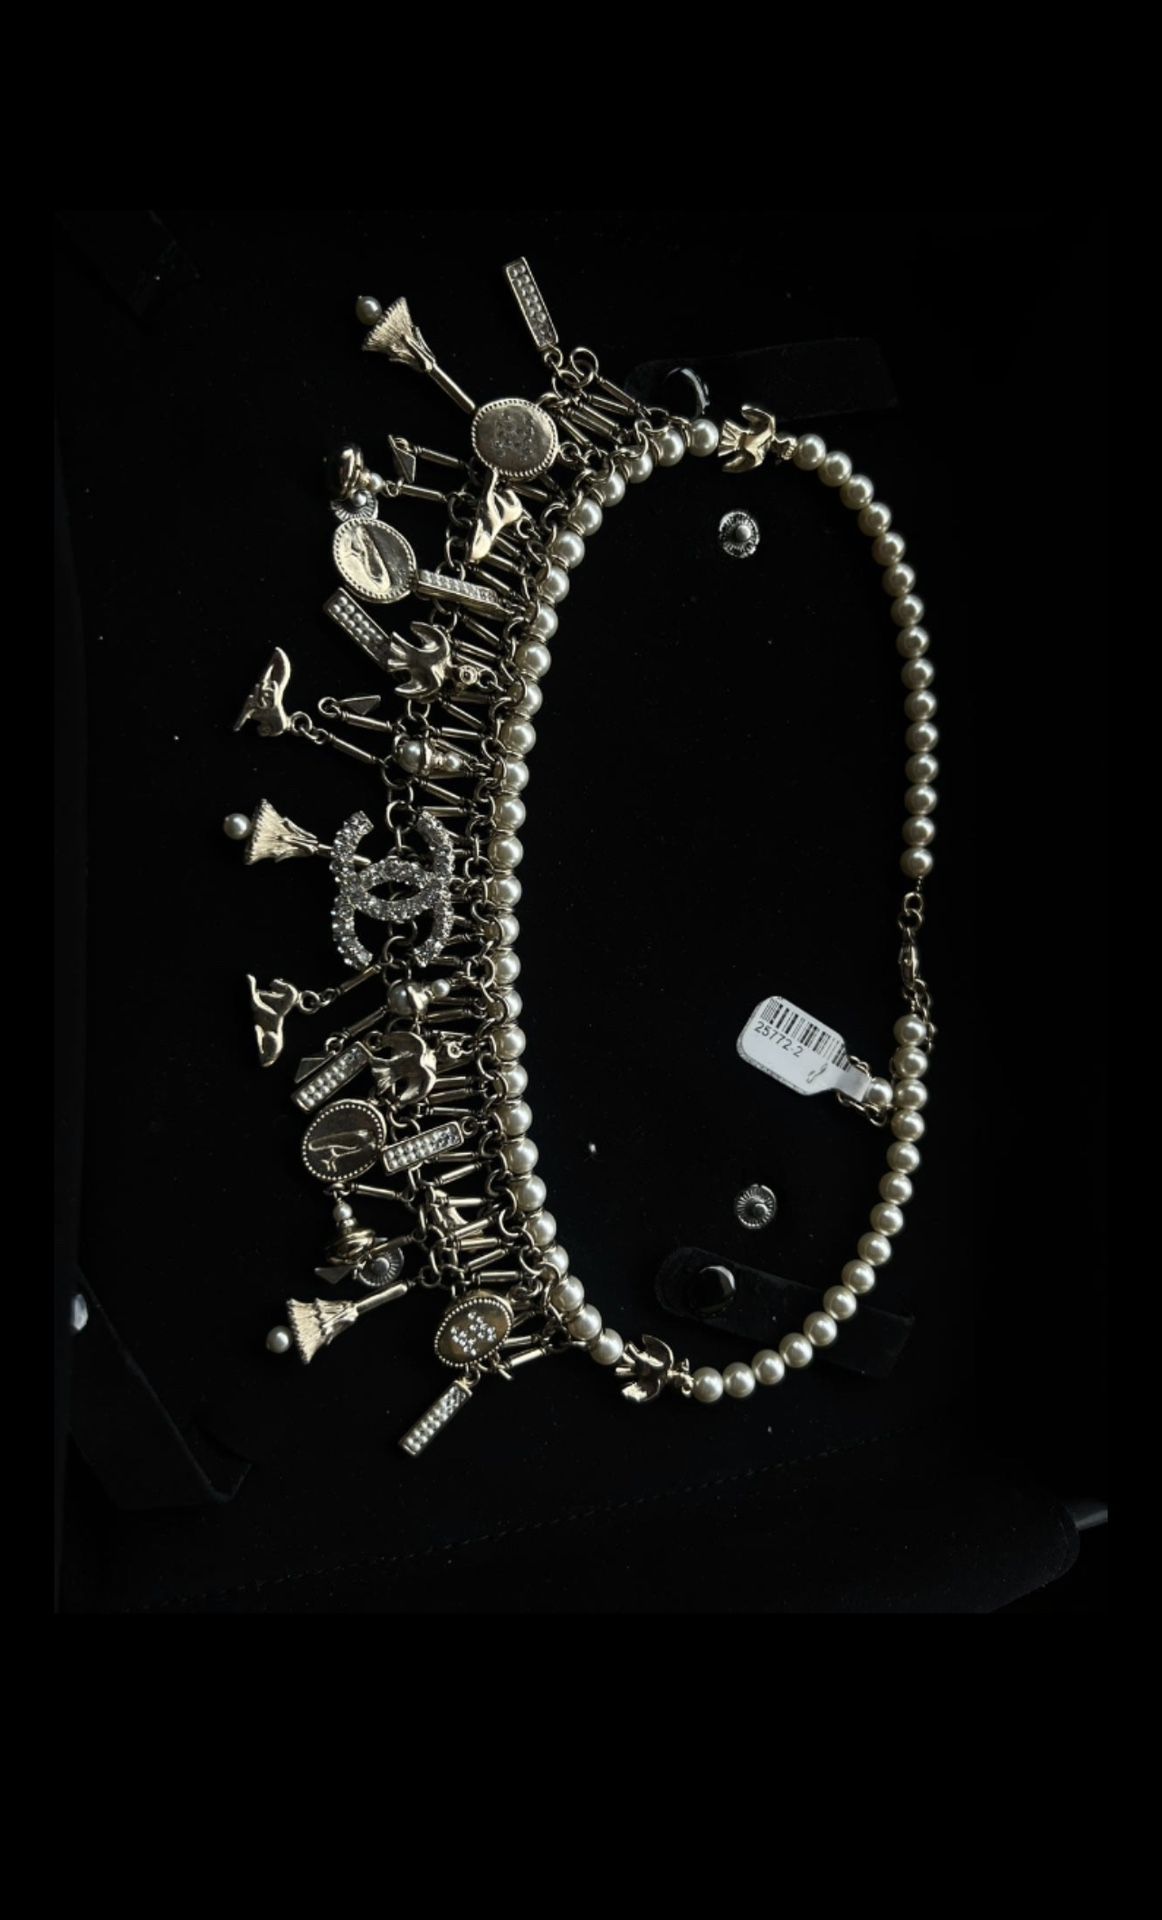 Chanel Necklace for Sale in Phoenix, AZ - OfferUp